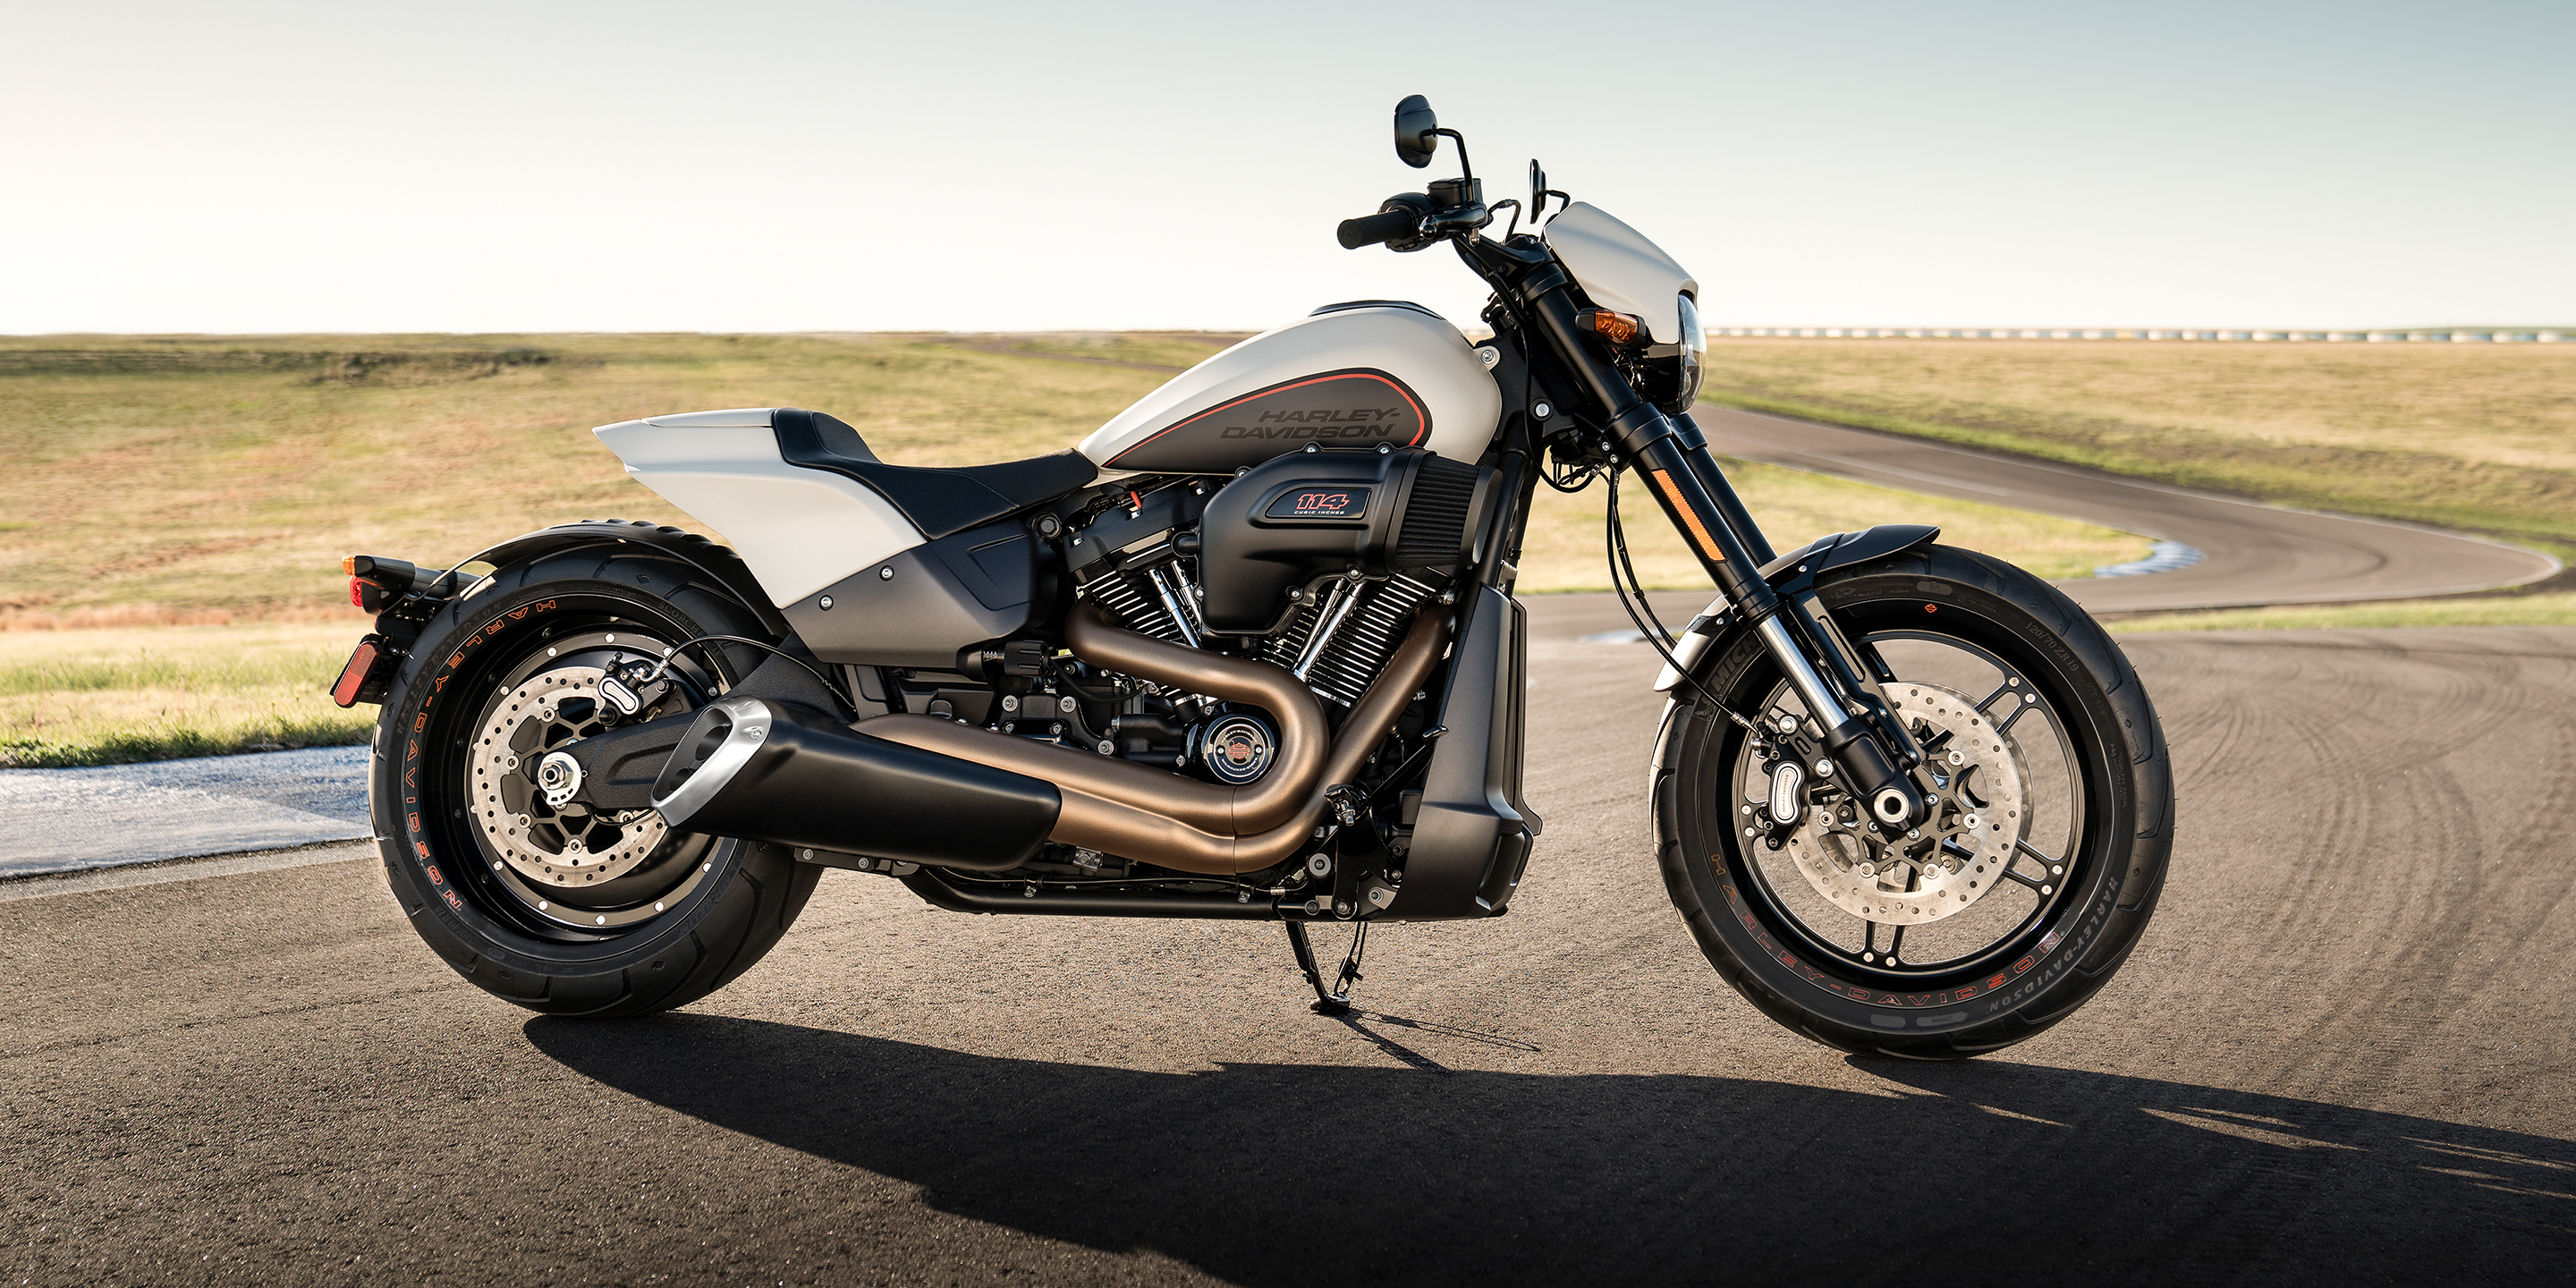  2019  FXDR Motorcycle Harley  Davidson  USA